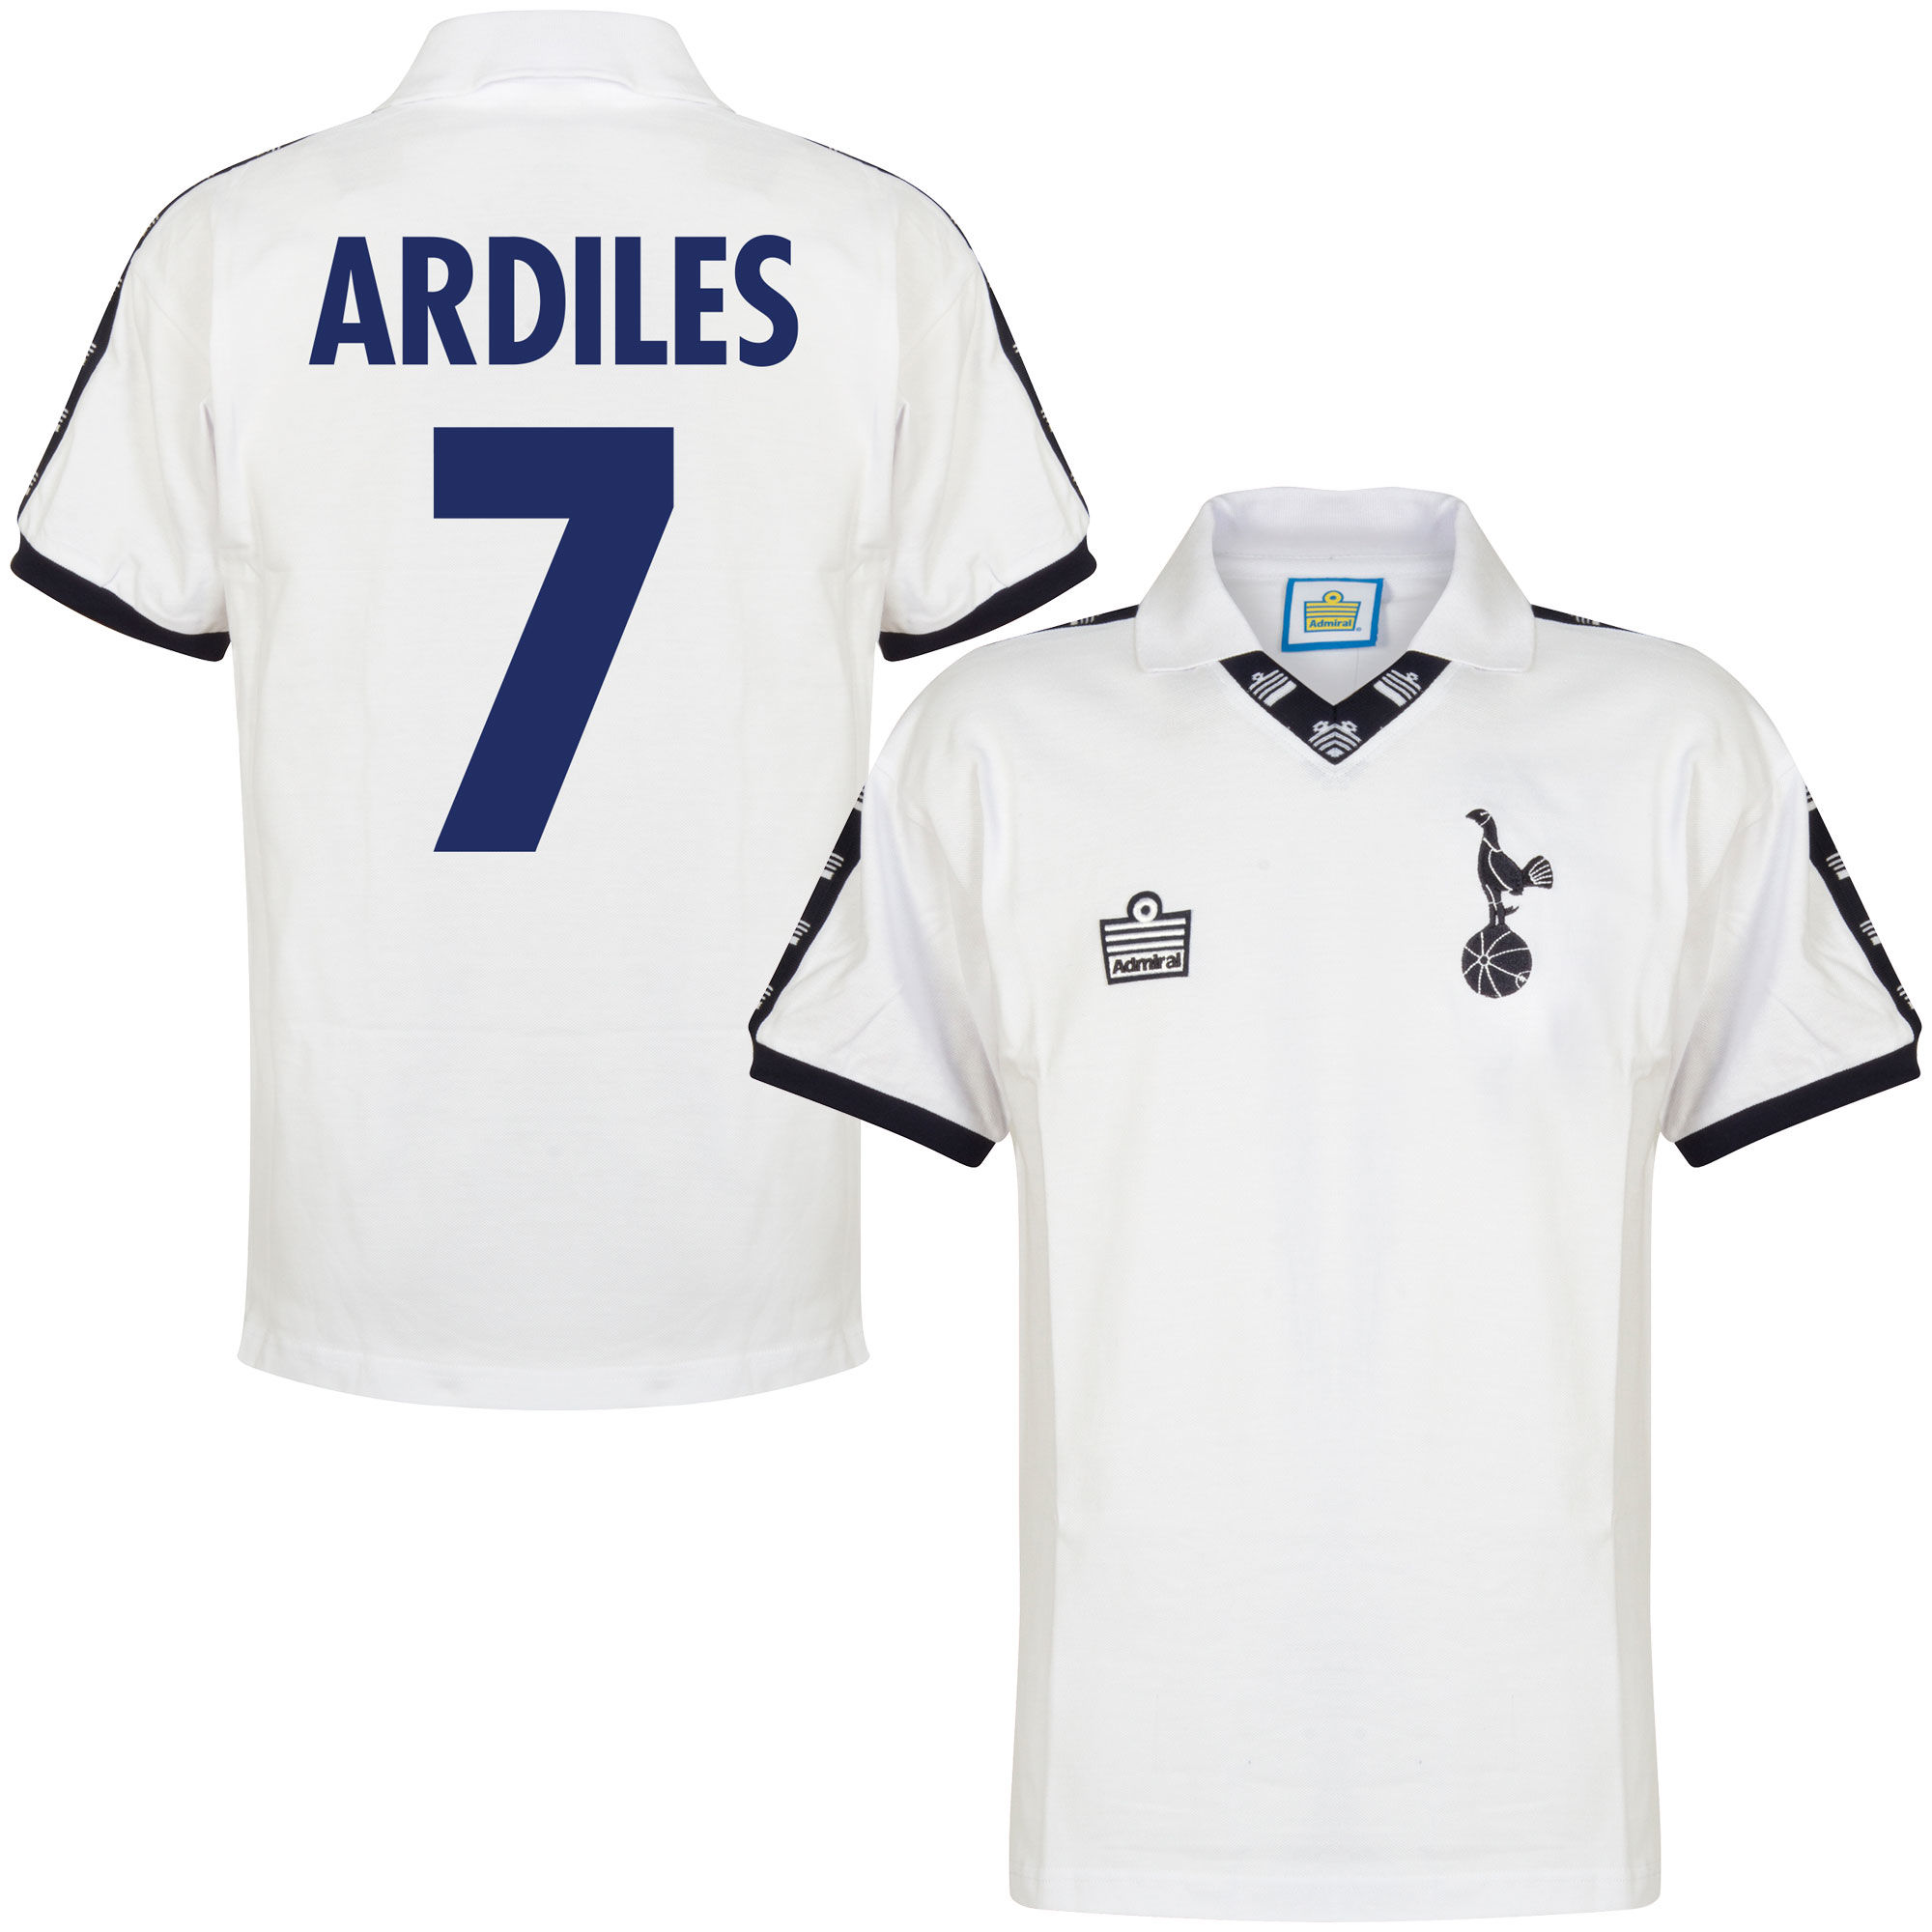 Tottenham Hotspur - Dres fotbalový - bílý, retrostyl, číslo 7, sezóna 1977/78, Osvaldo Ardiles, domácí